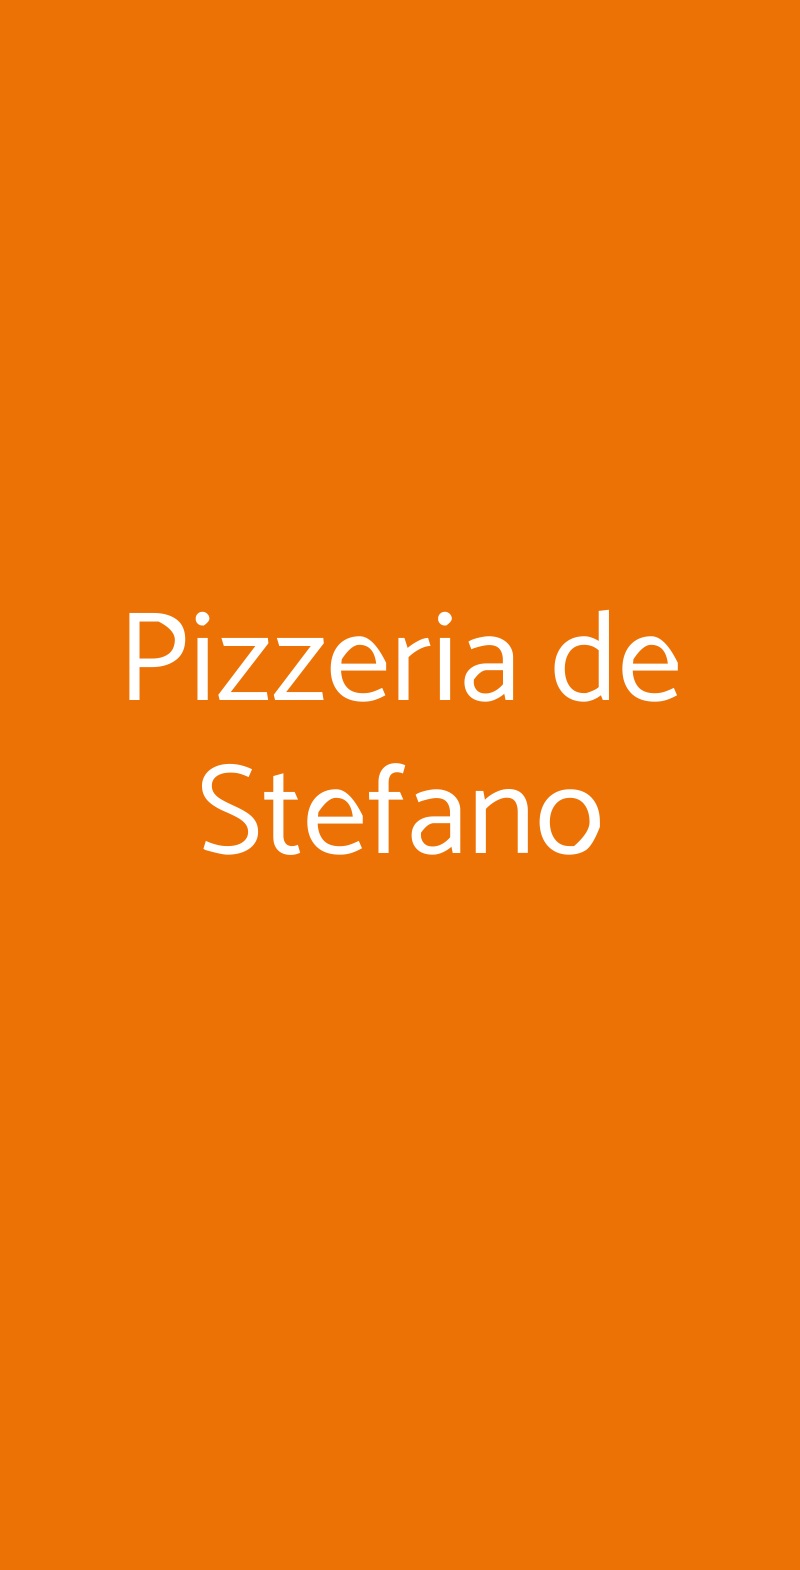 Pizzeria de Stefano Napoli menù 1 pagina